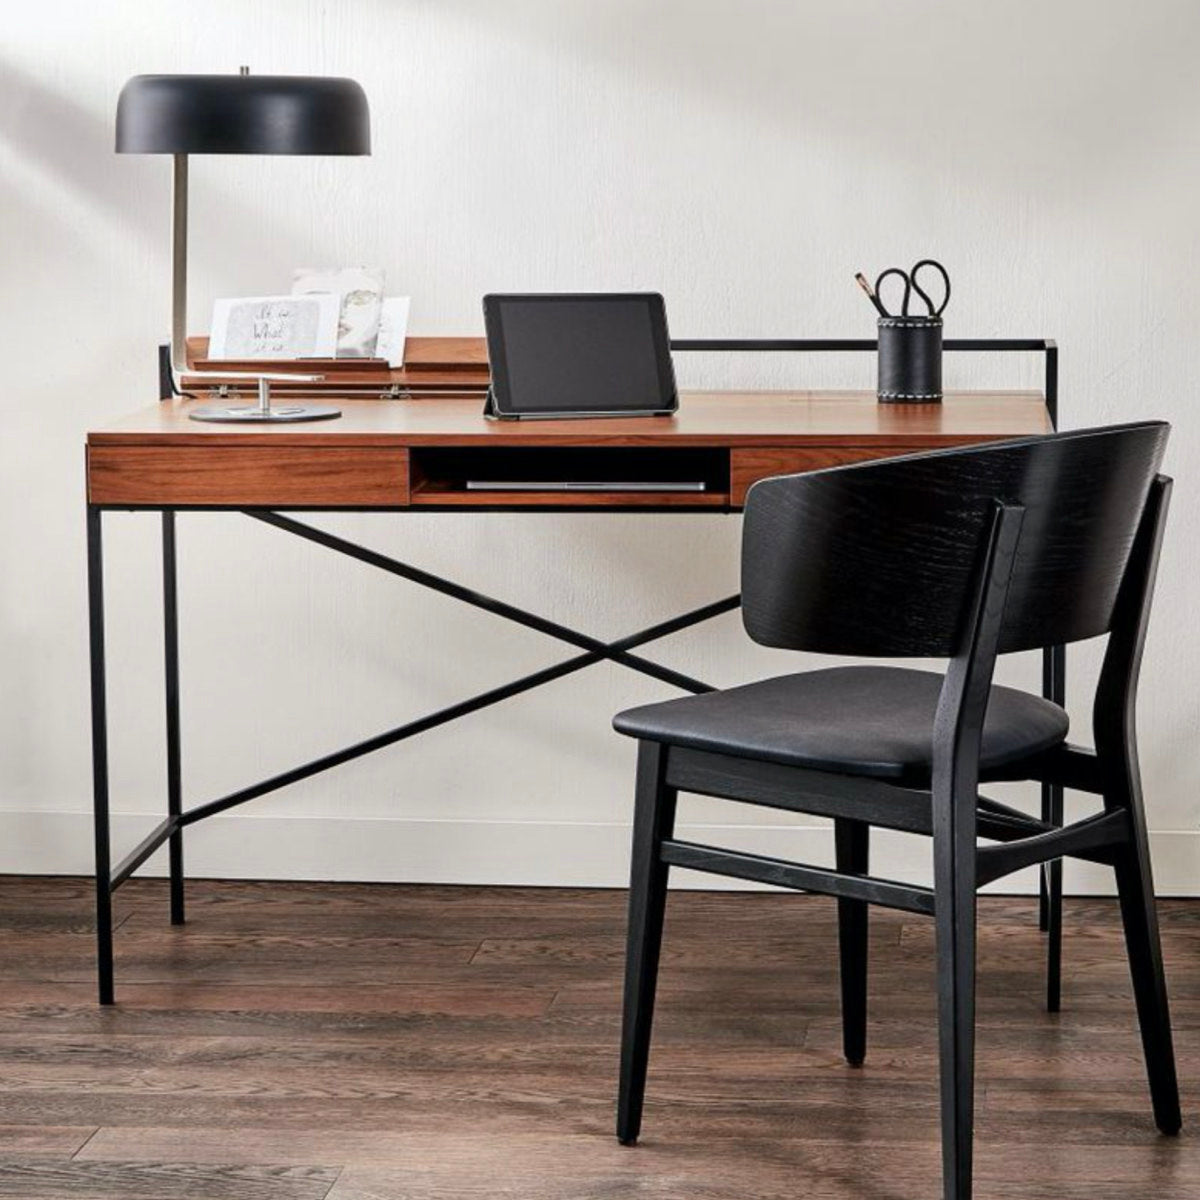 DERRICK desk with LEANDER chair by Lambert